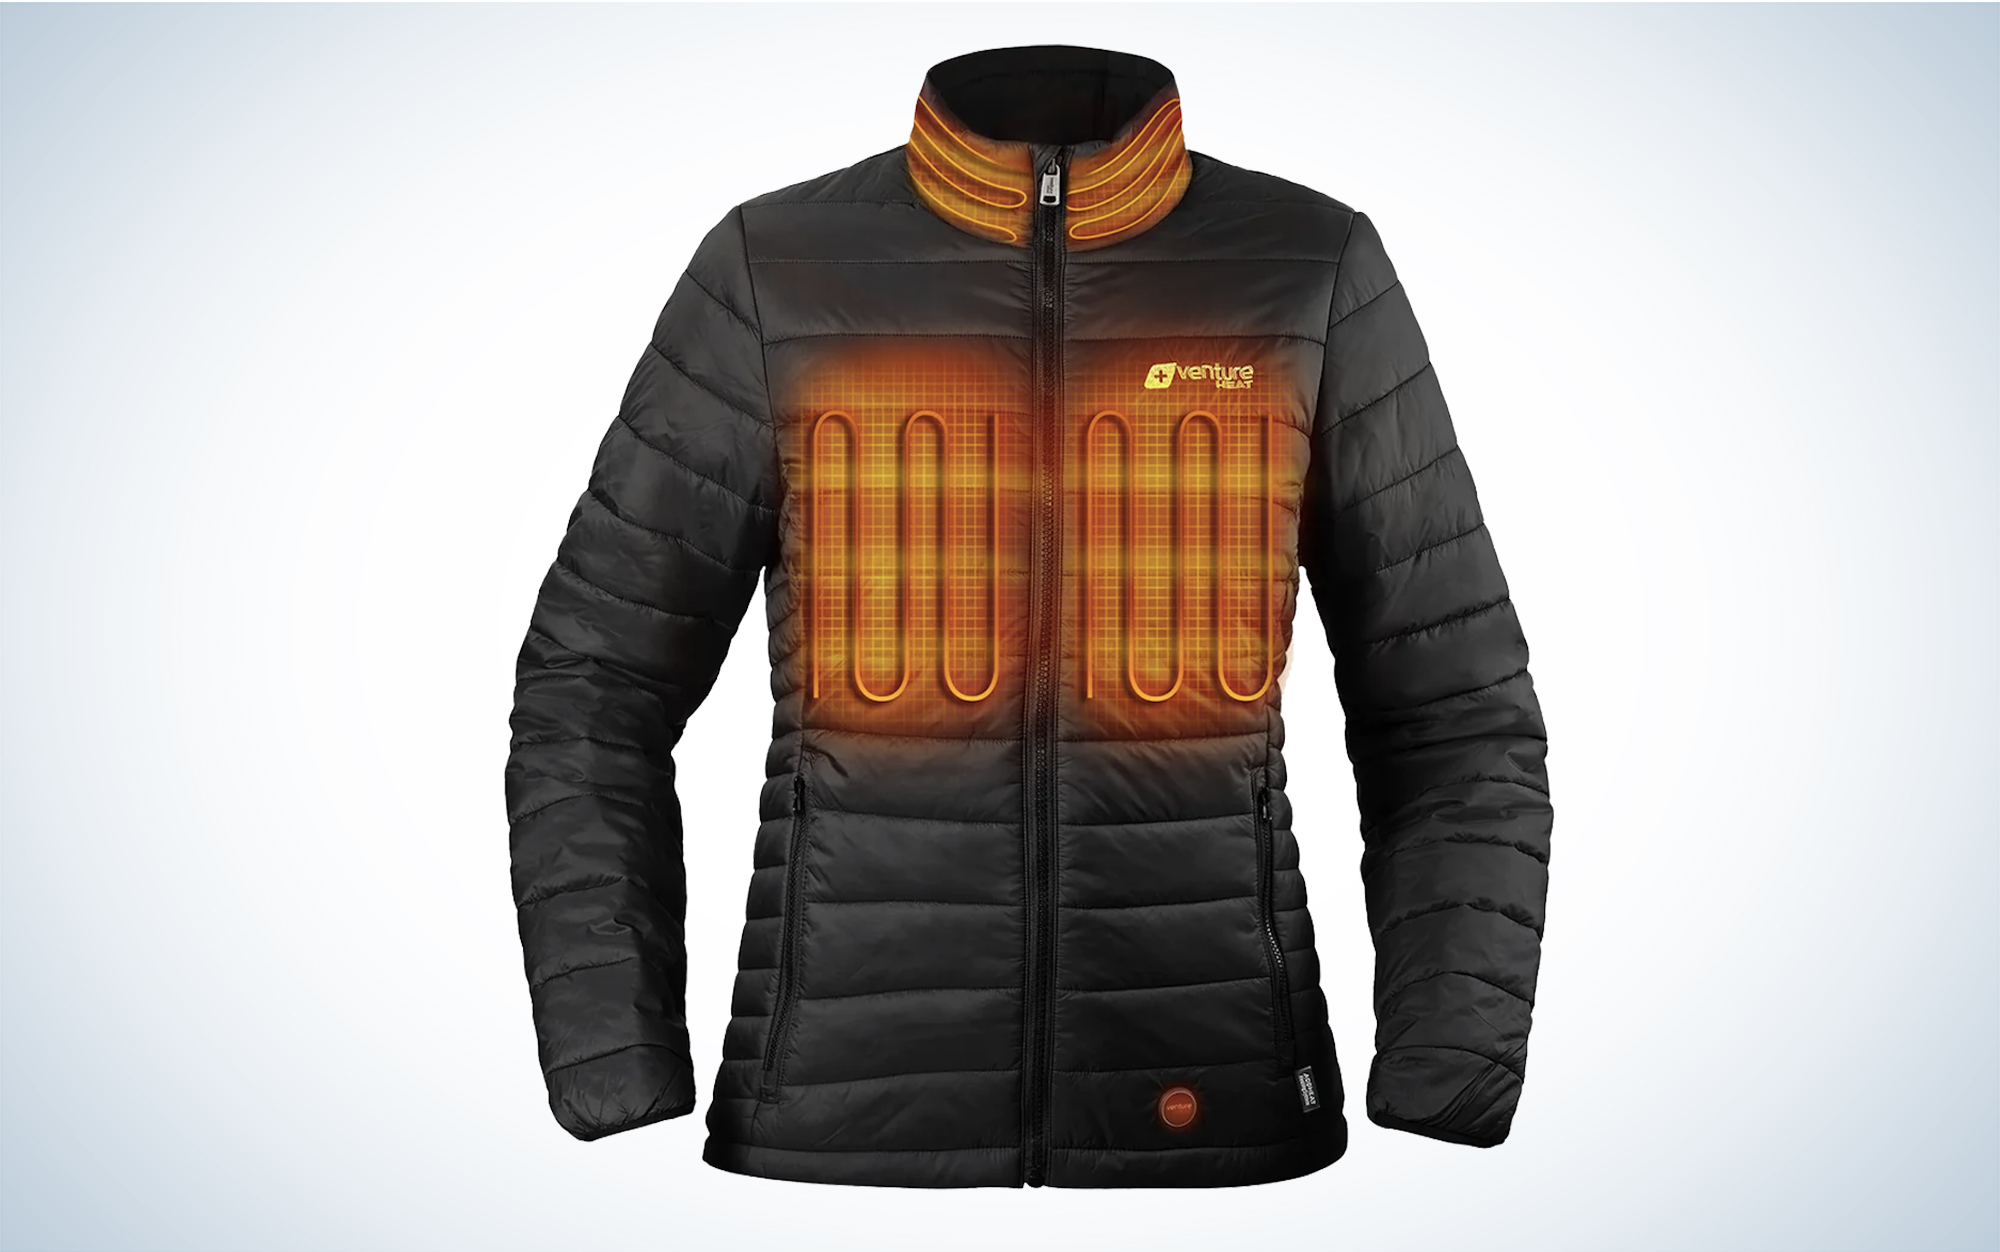 Venture Heated Puffer Jacket with HeatSync